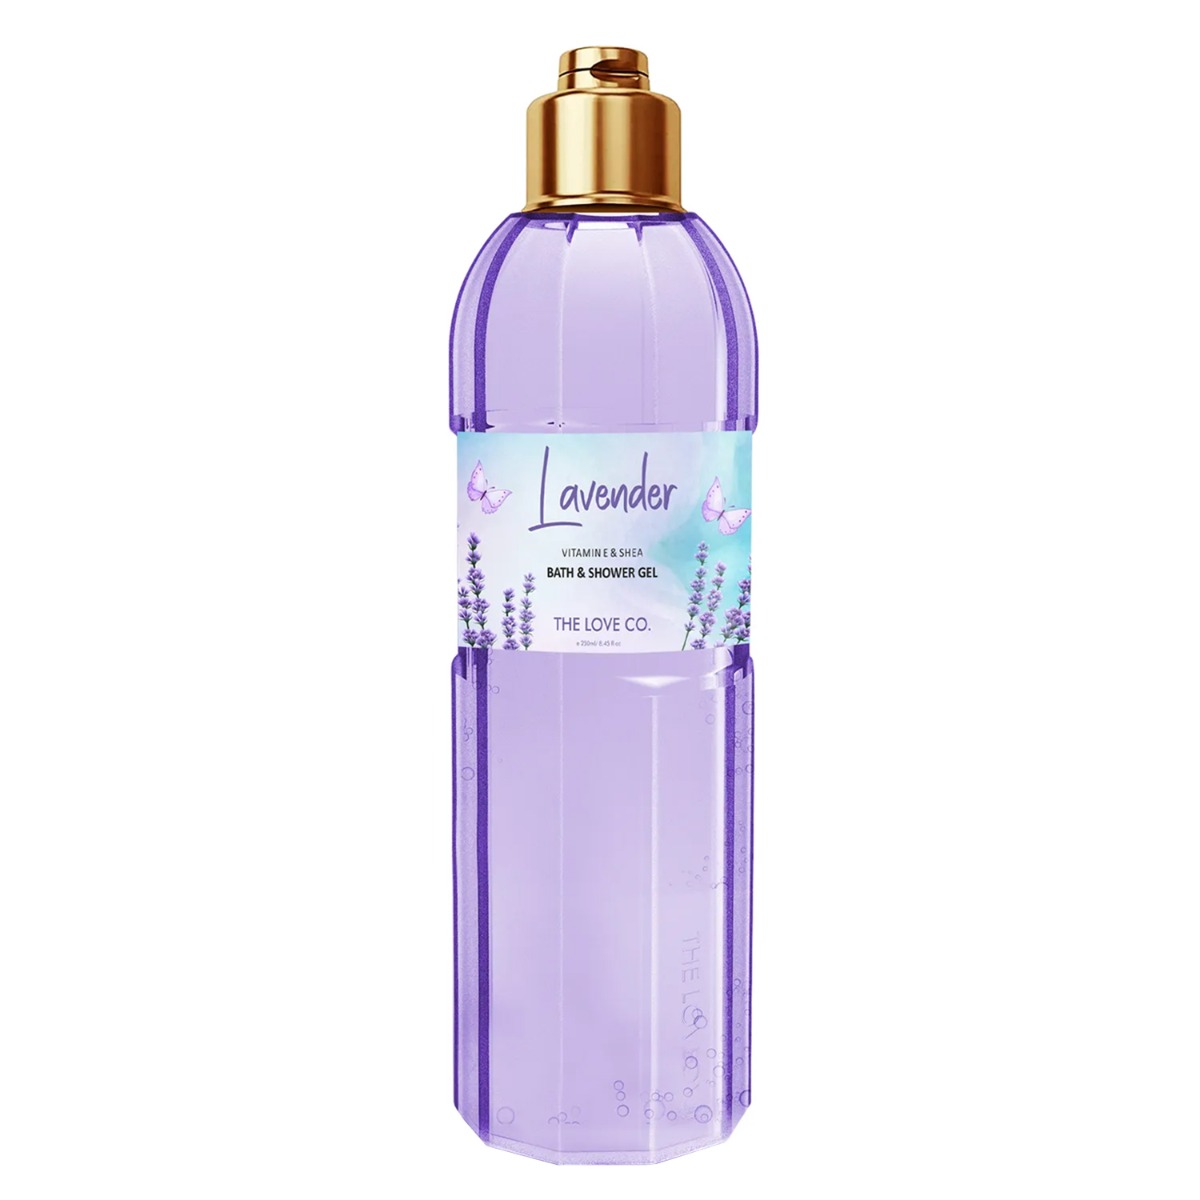 The Love Co. Luxury French Lavender Bath & Shower Gel, 250ml